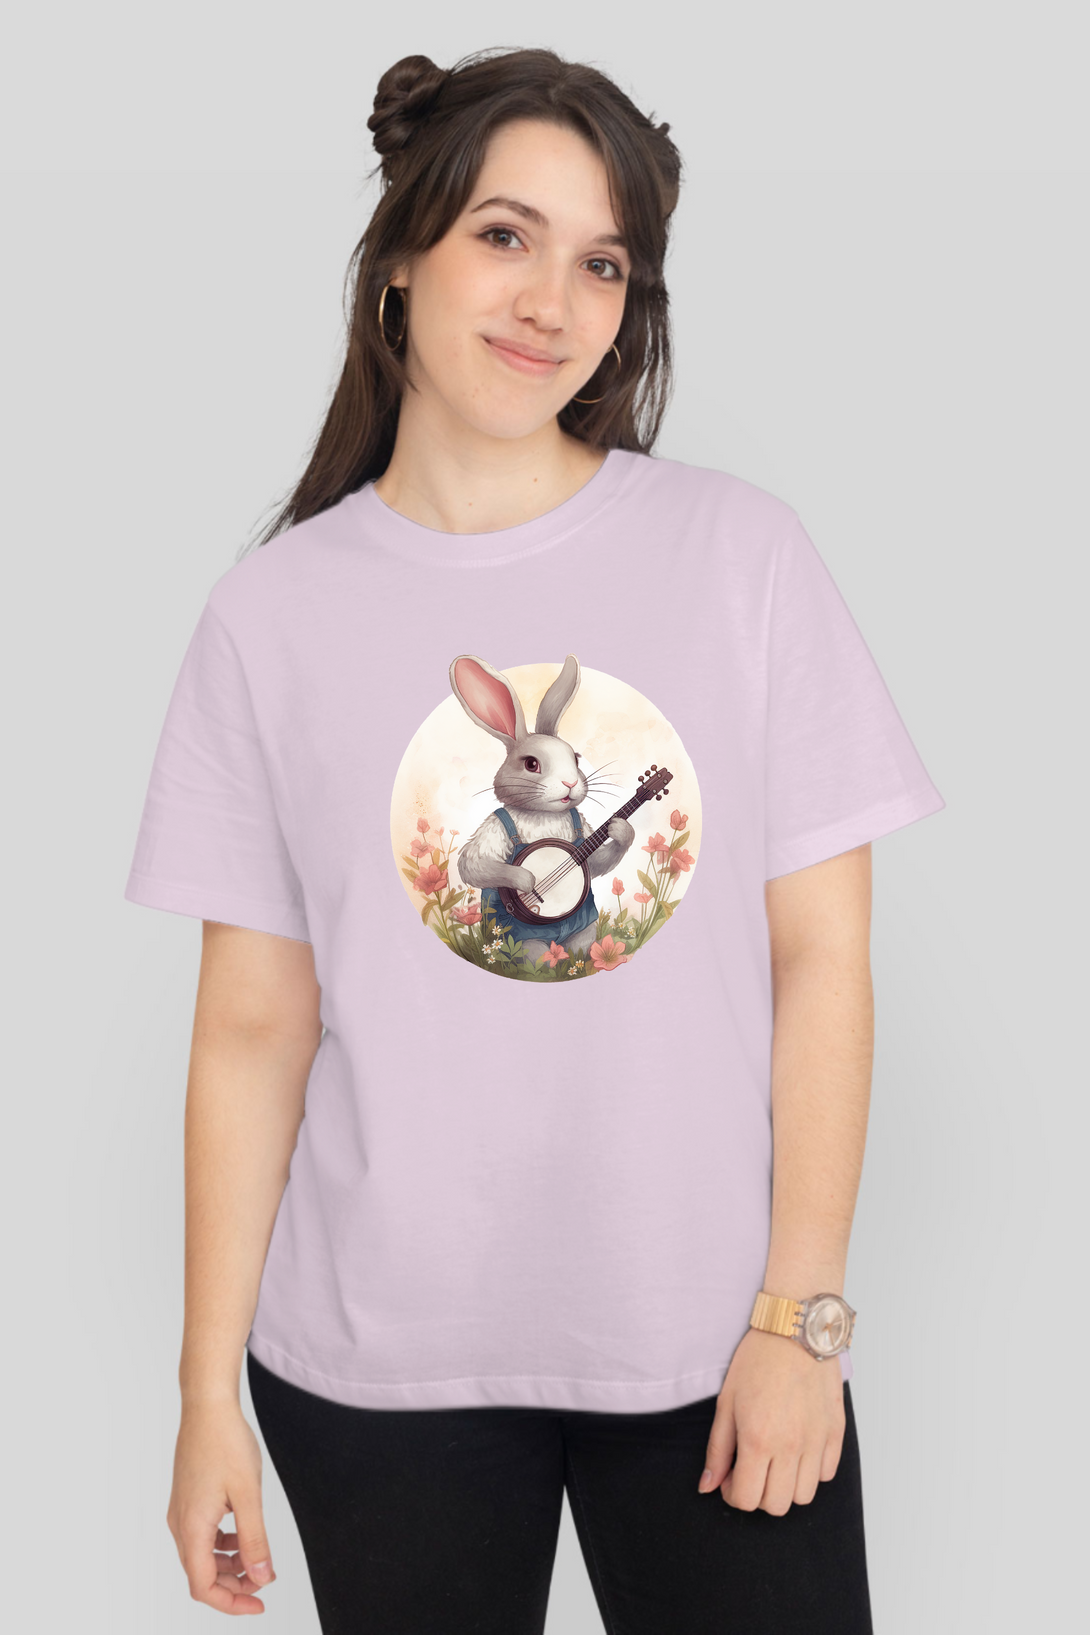 Bunny Jammin Printed T-Shirt For Women - WowWaves - 11